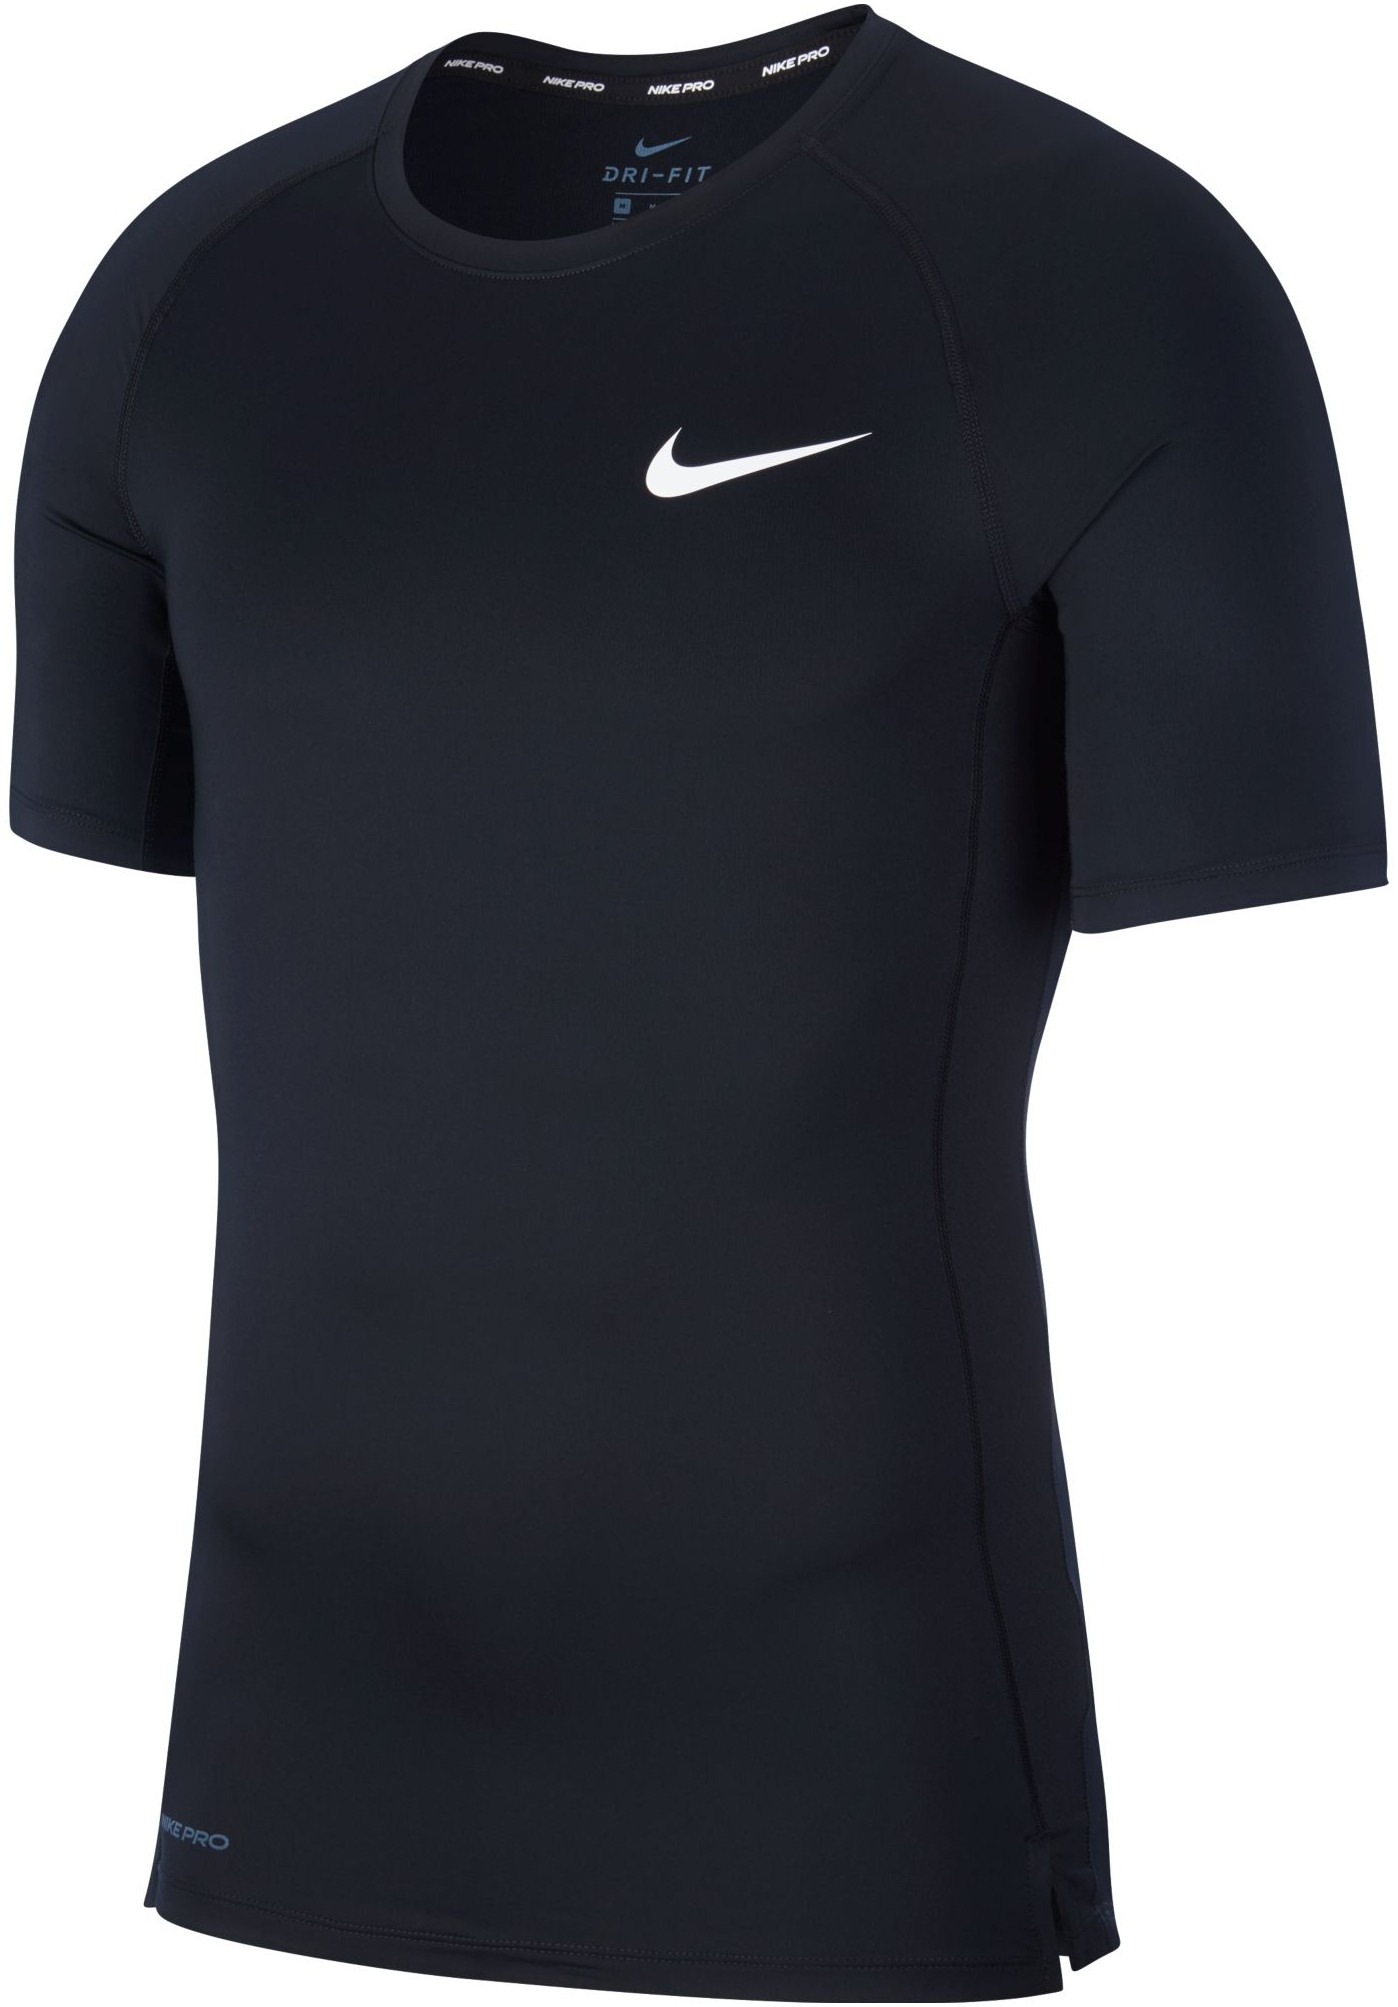 Mens compression short sleeve shirt Nike PRO black | AD Sport.store